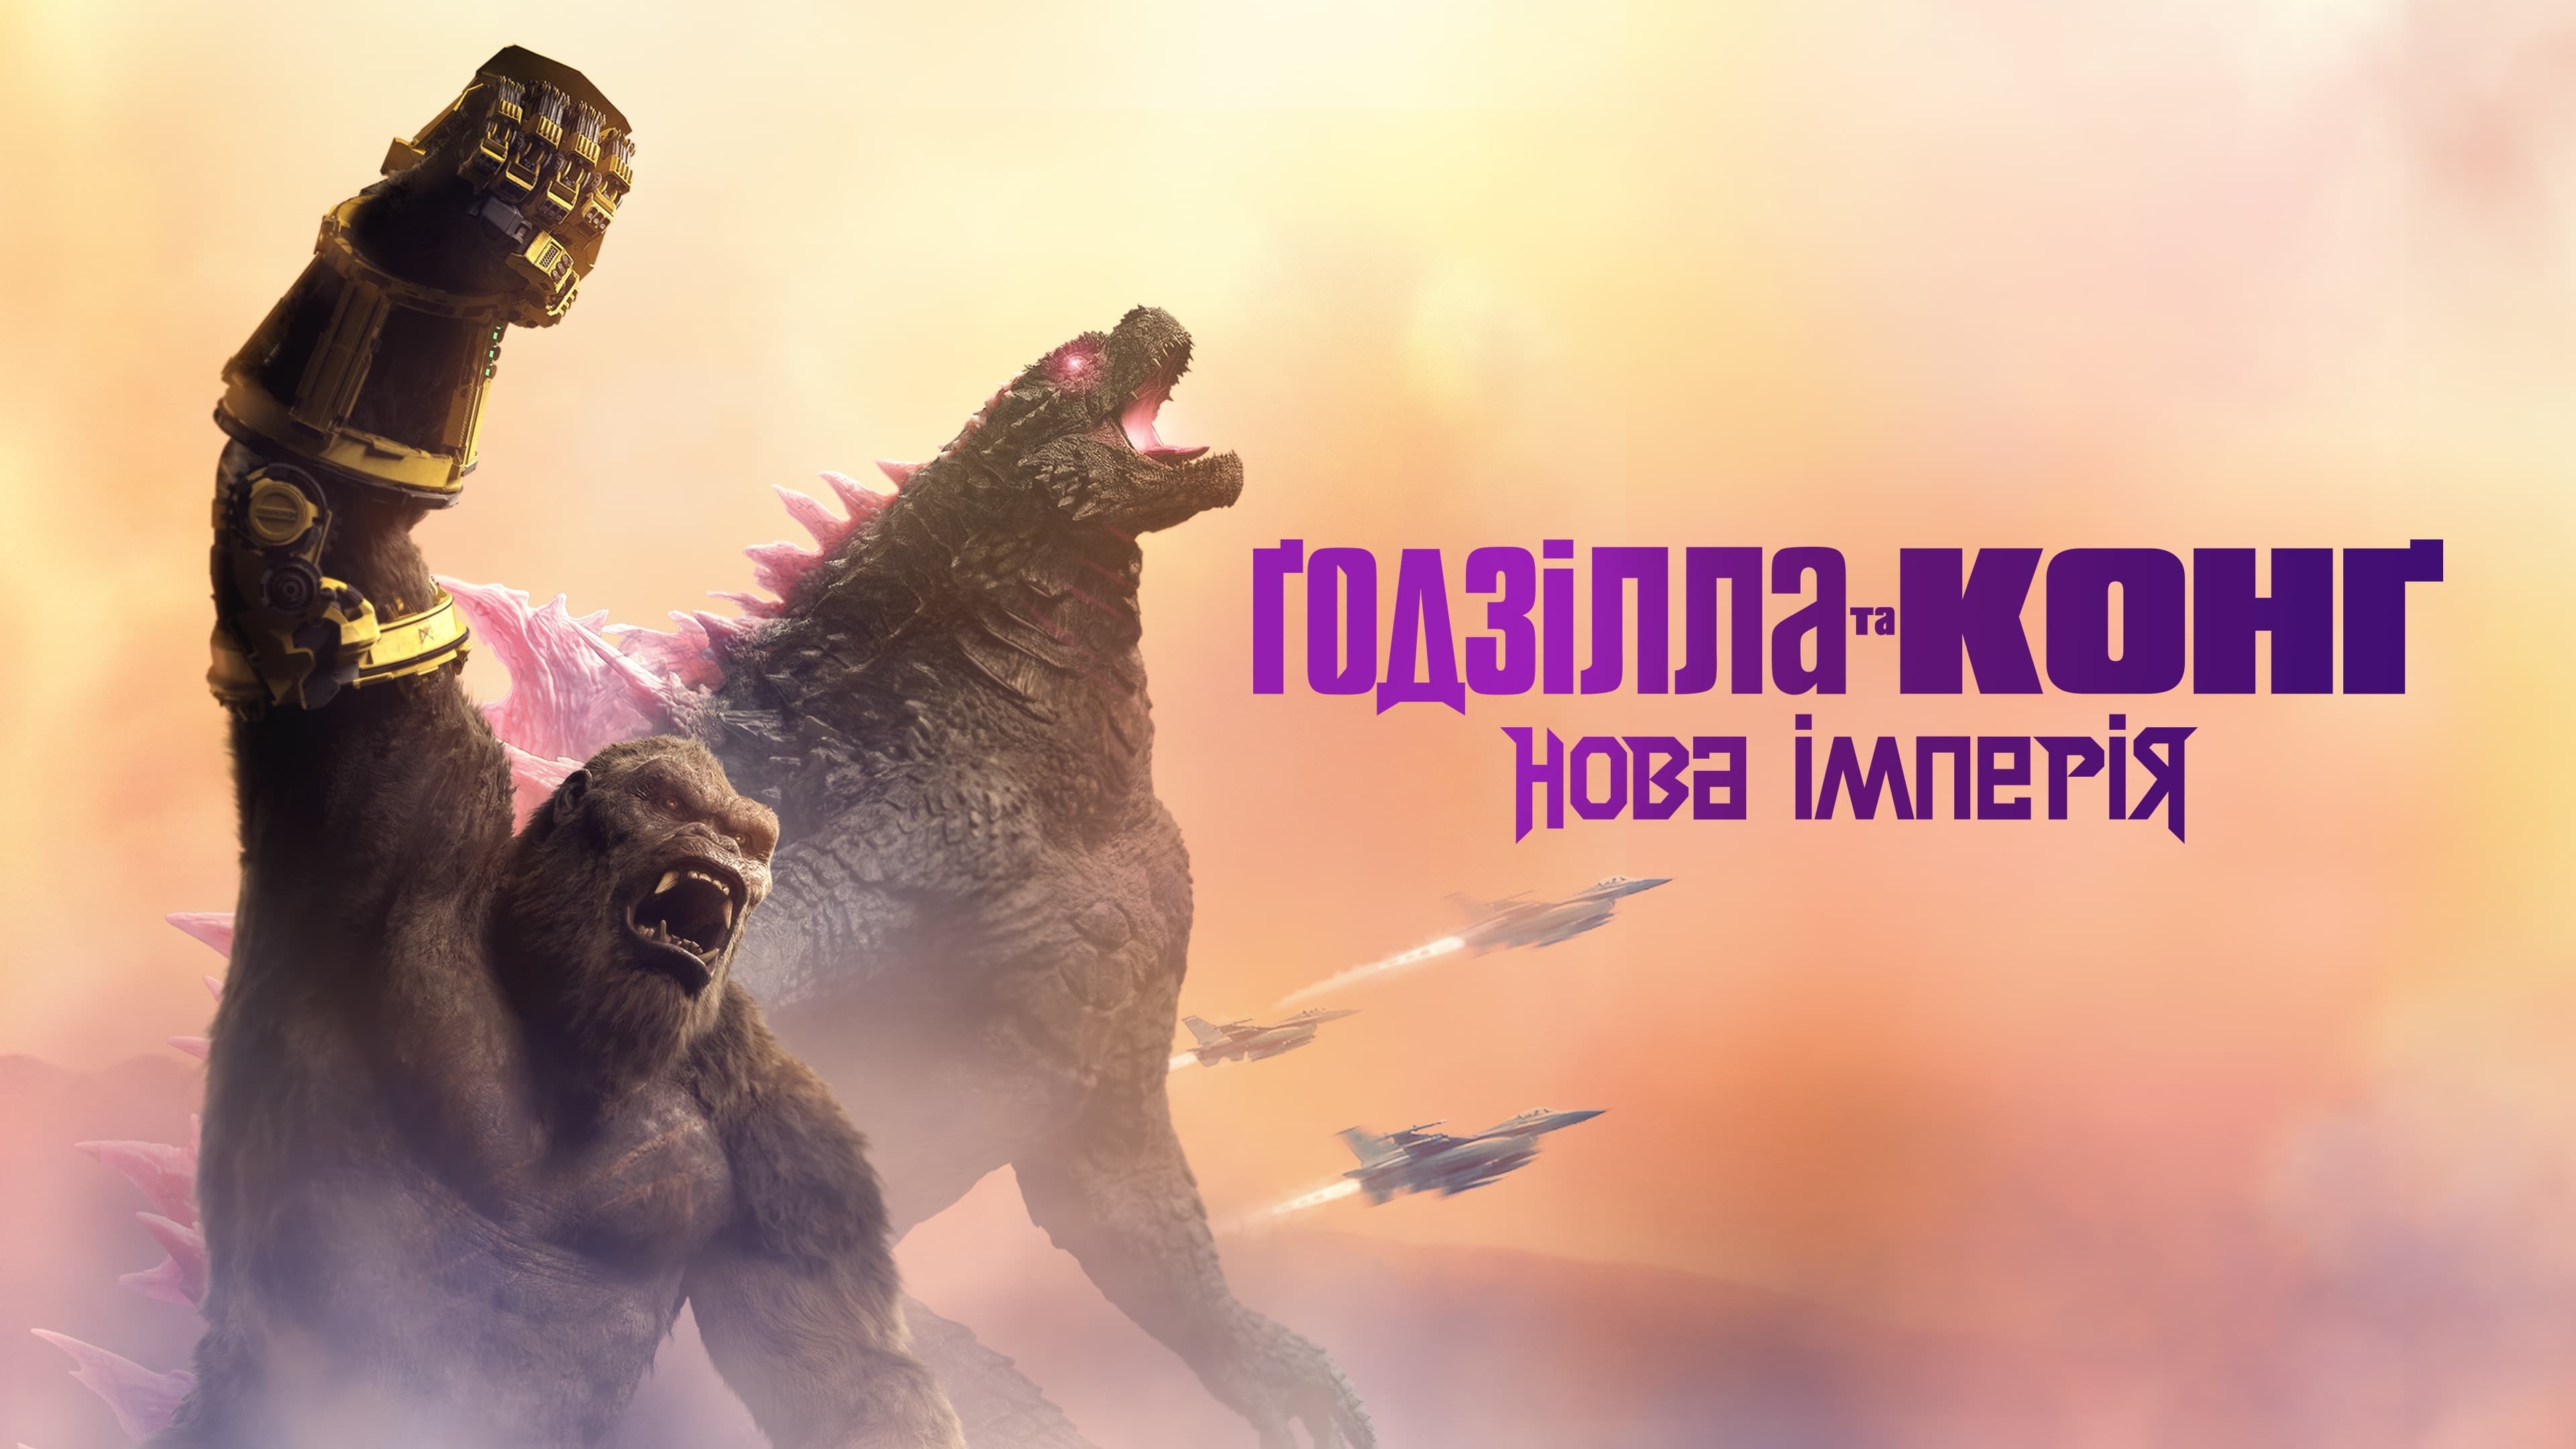 Godzilla x Kong: Kekaisaran Baru